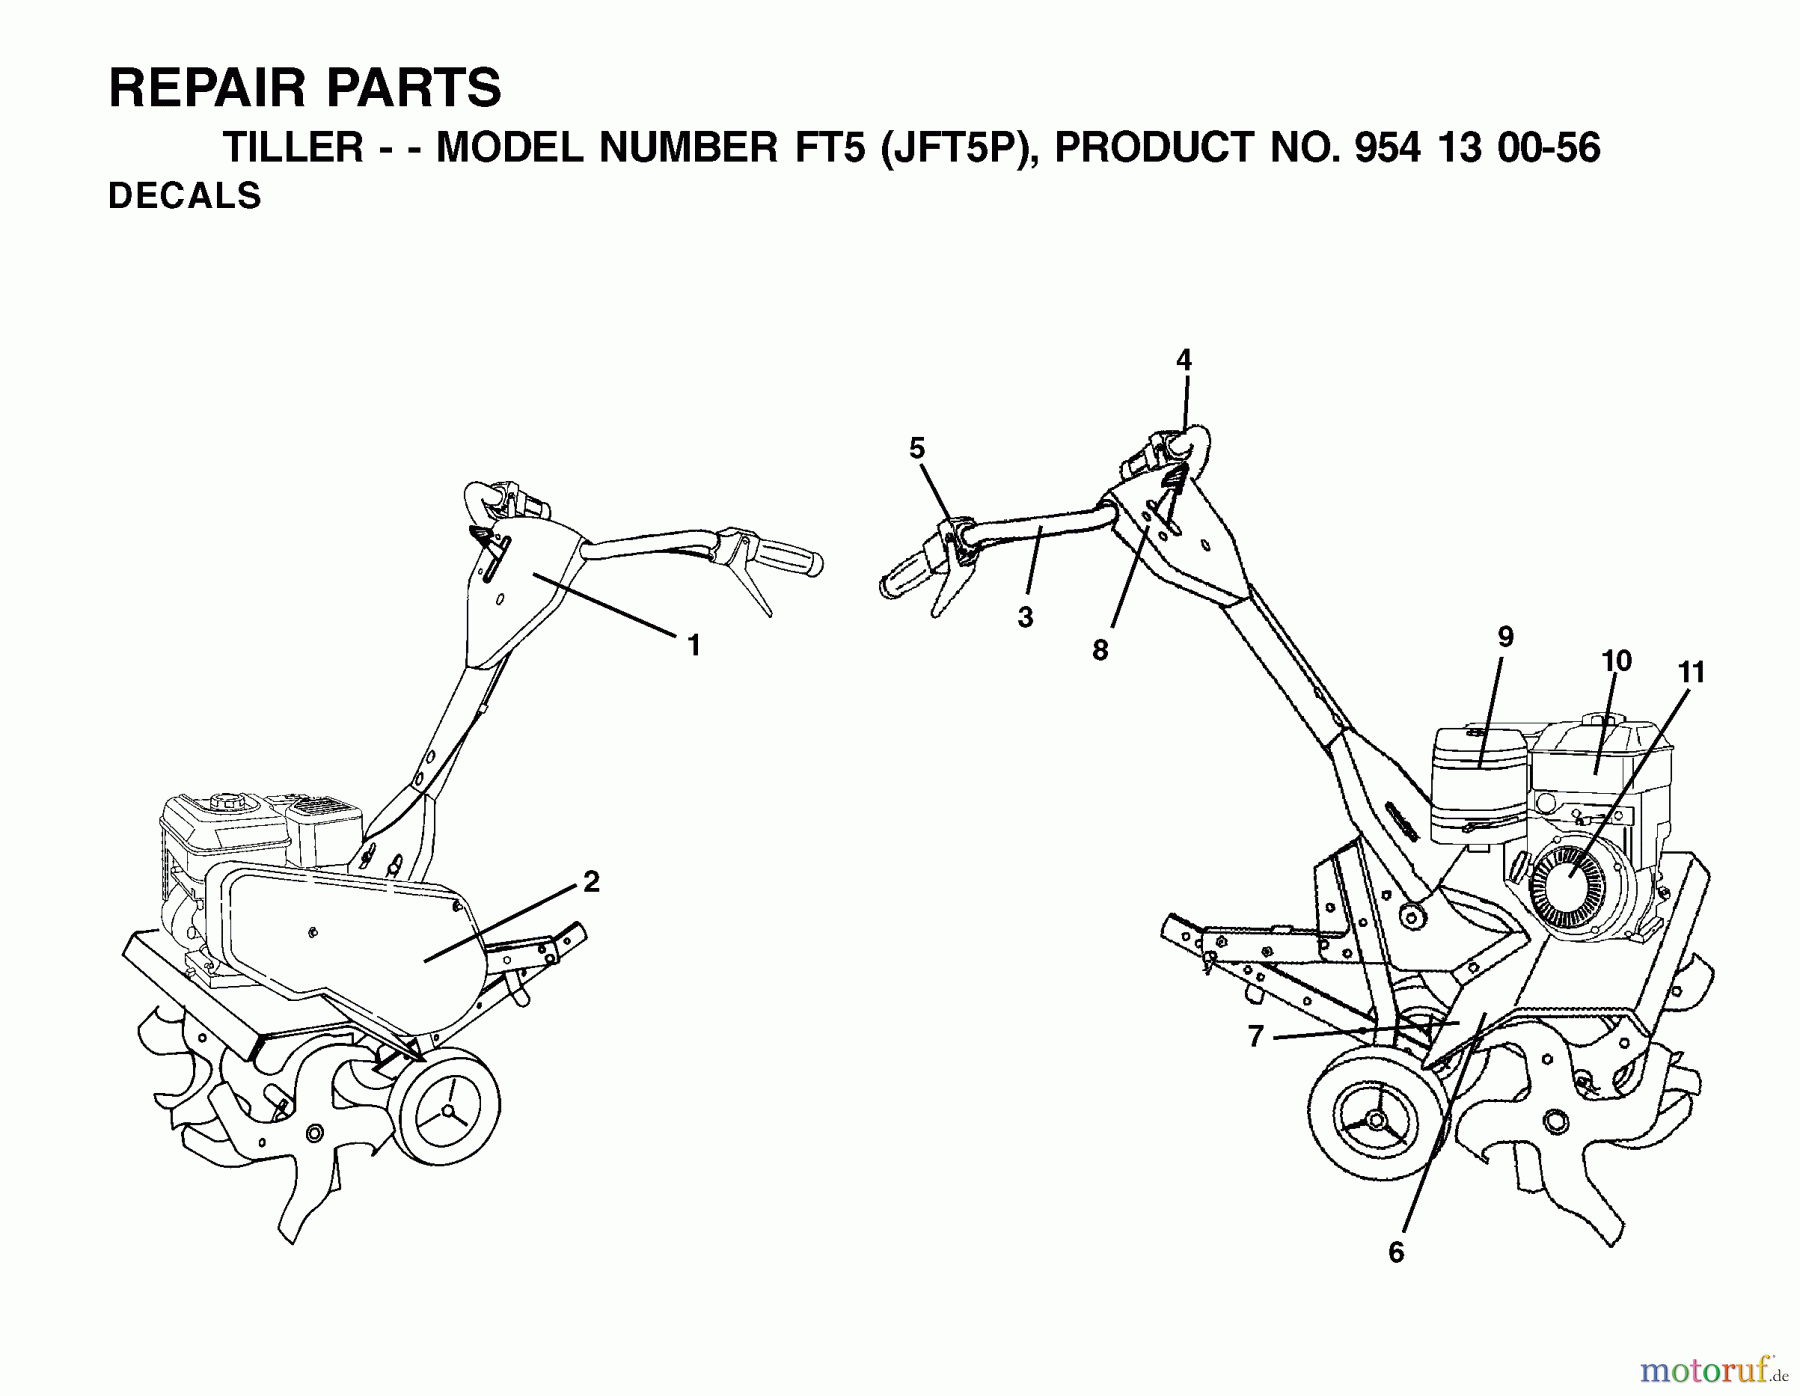  Jonsered Motorhacken / Kultivierer FT5 (JFT5P, 954130056) - Jonsered Front-Tine Tiller (2002-02) DECALS